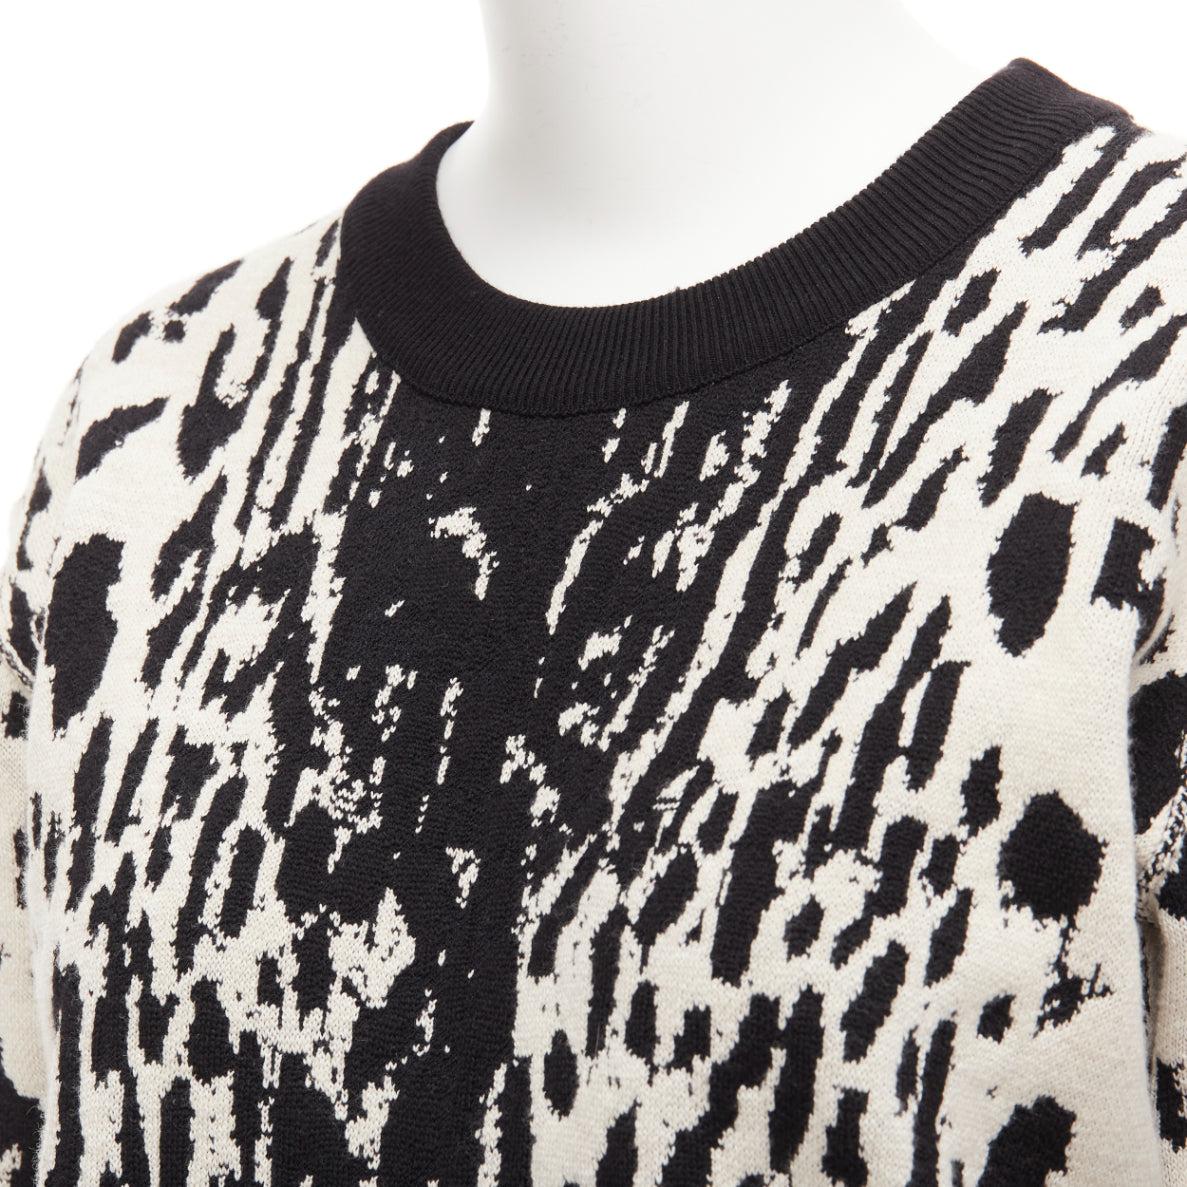 LANVIN 2013 cream black leopard jacquard wool blend ringer sweater top S
Reference: NKLL/A00150
Brand: Lanvin
Designer: Alber Elbaz
Collection: 2013
Material: Wool, Blend
Color: Black, Cream
Pattern: Leopard
Closure: Pullover
Made in: